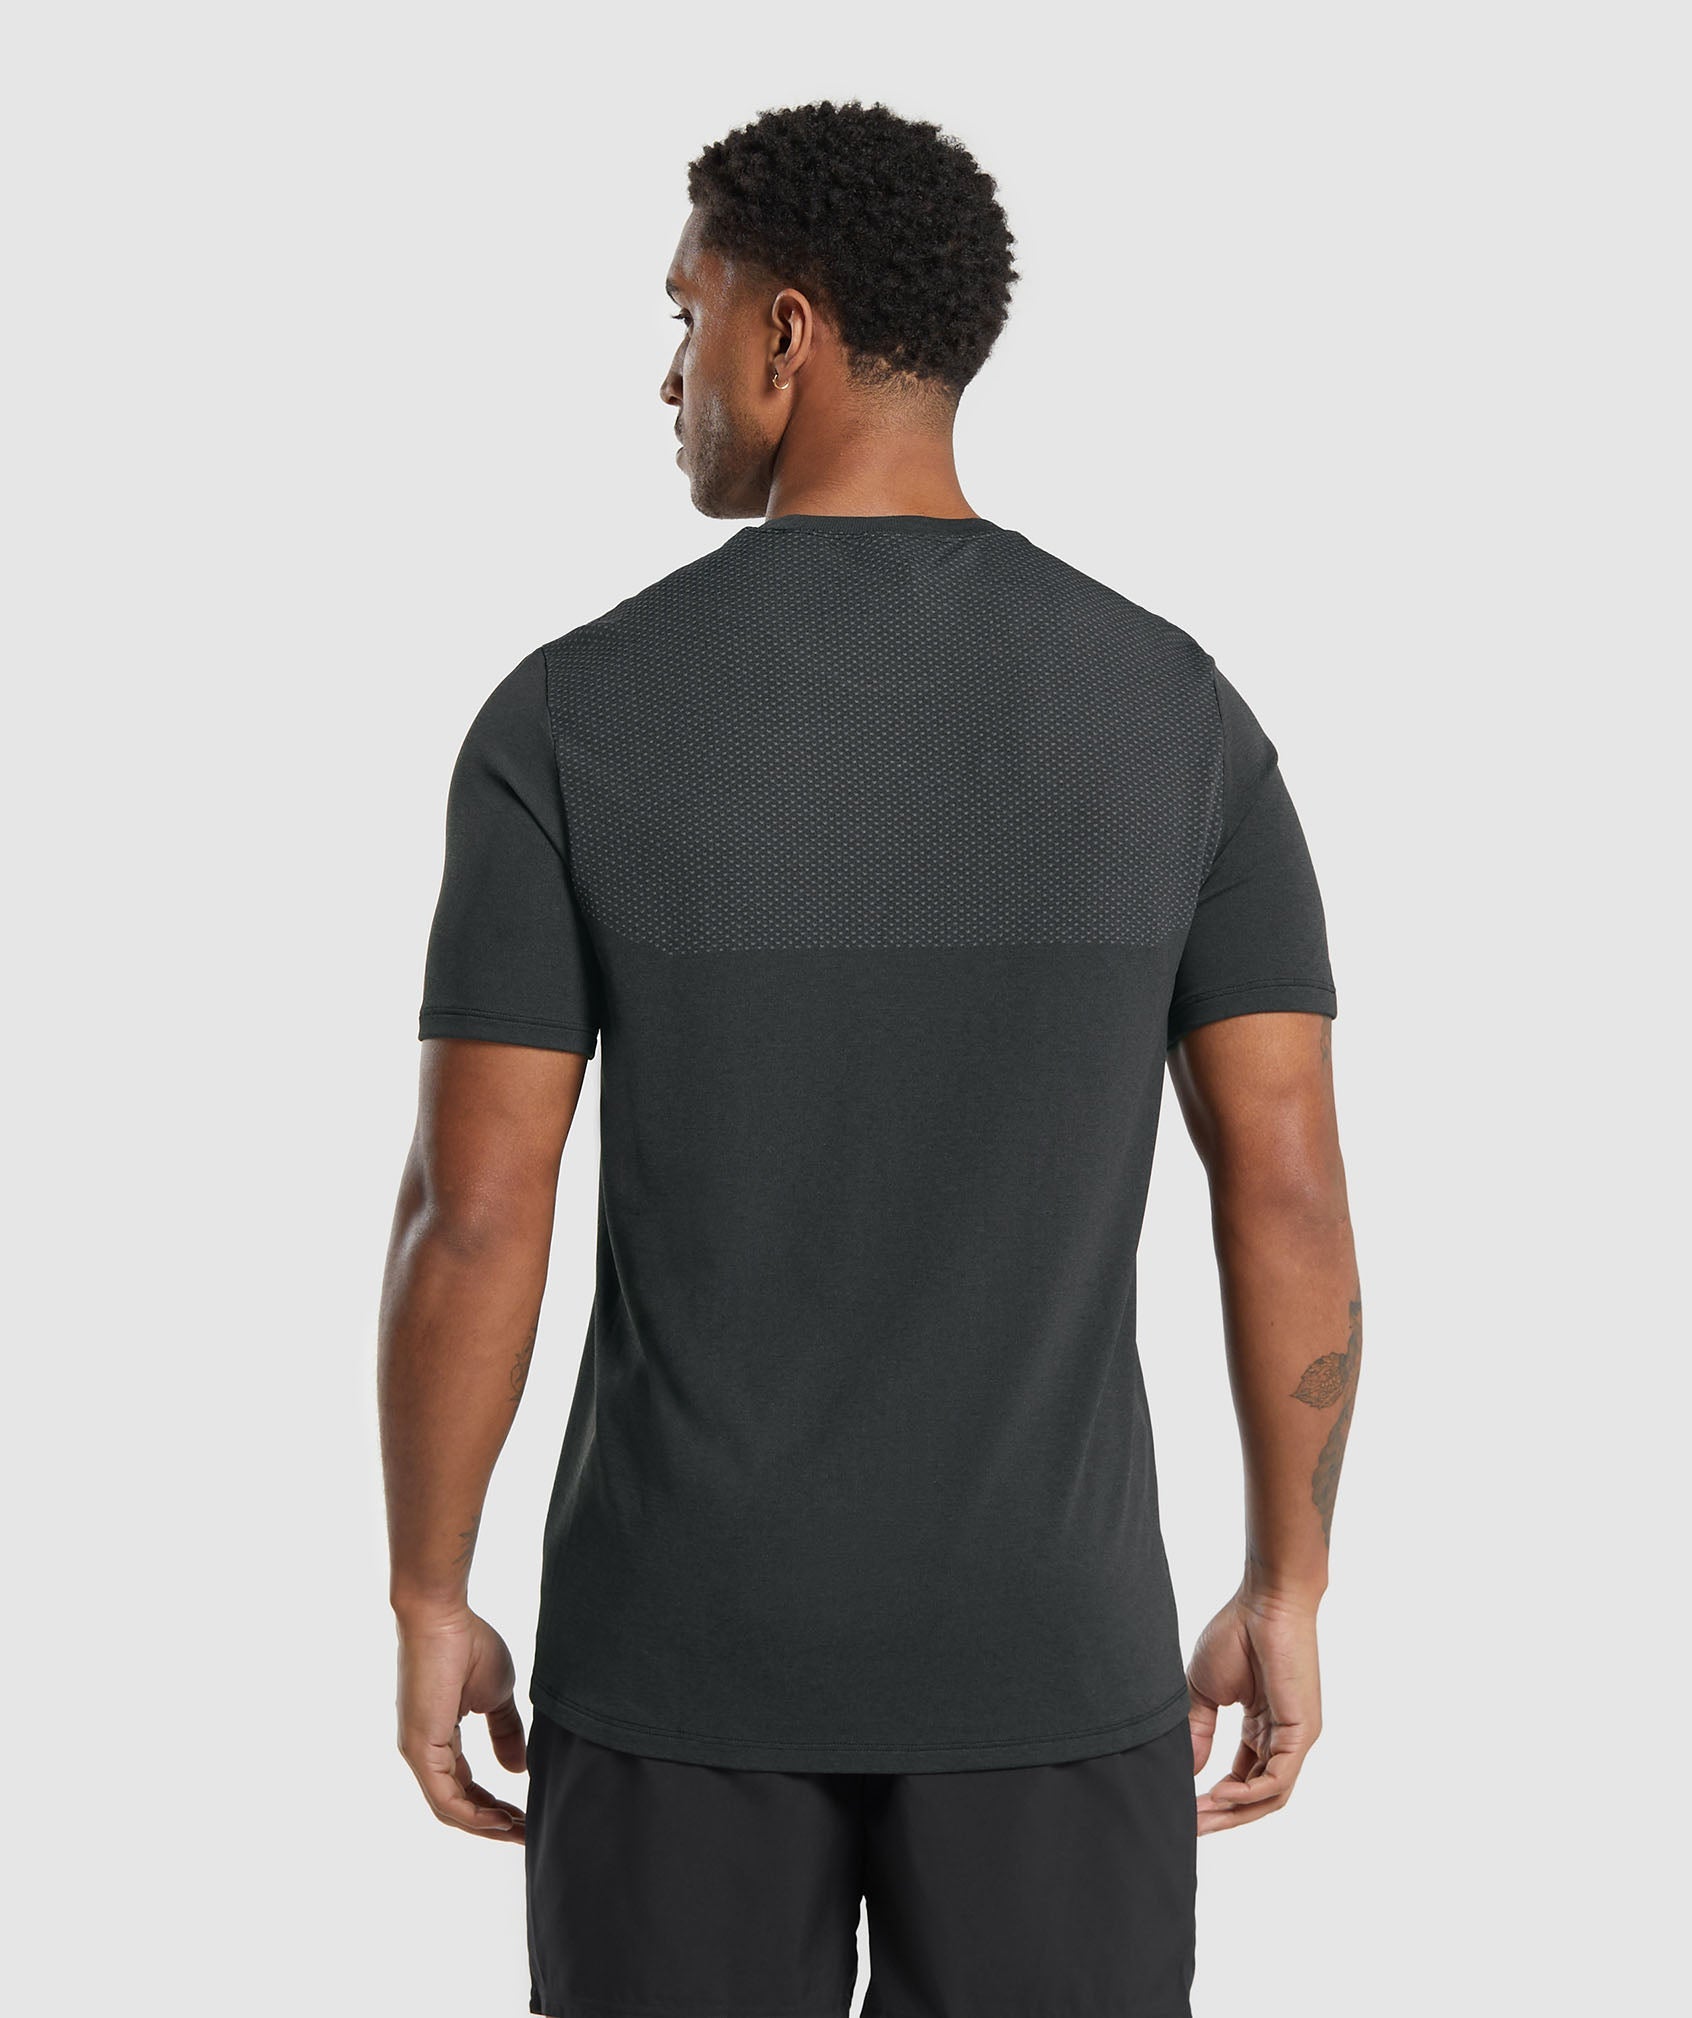 Vital Seamless T-Shirt in Black/Medium Grey Marl - view 2